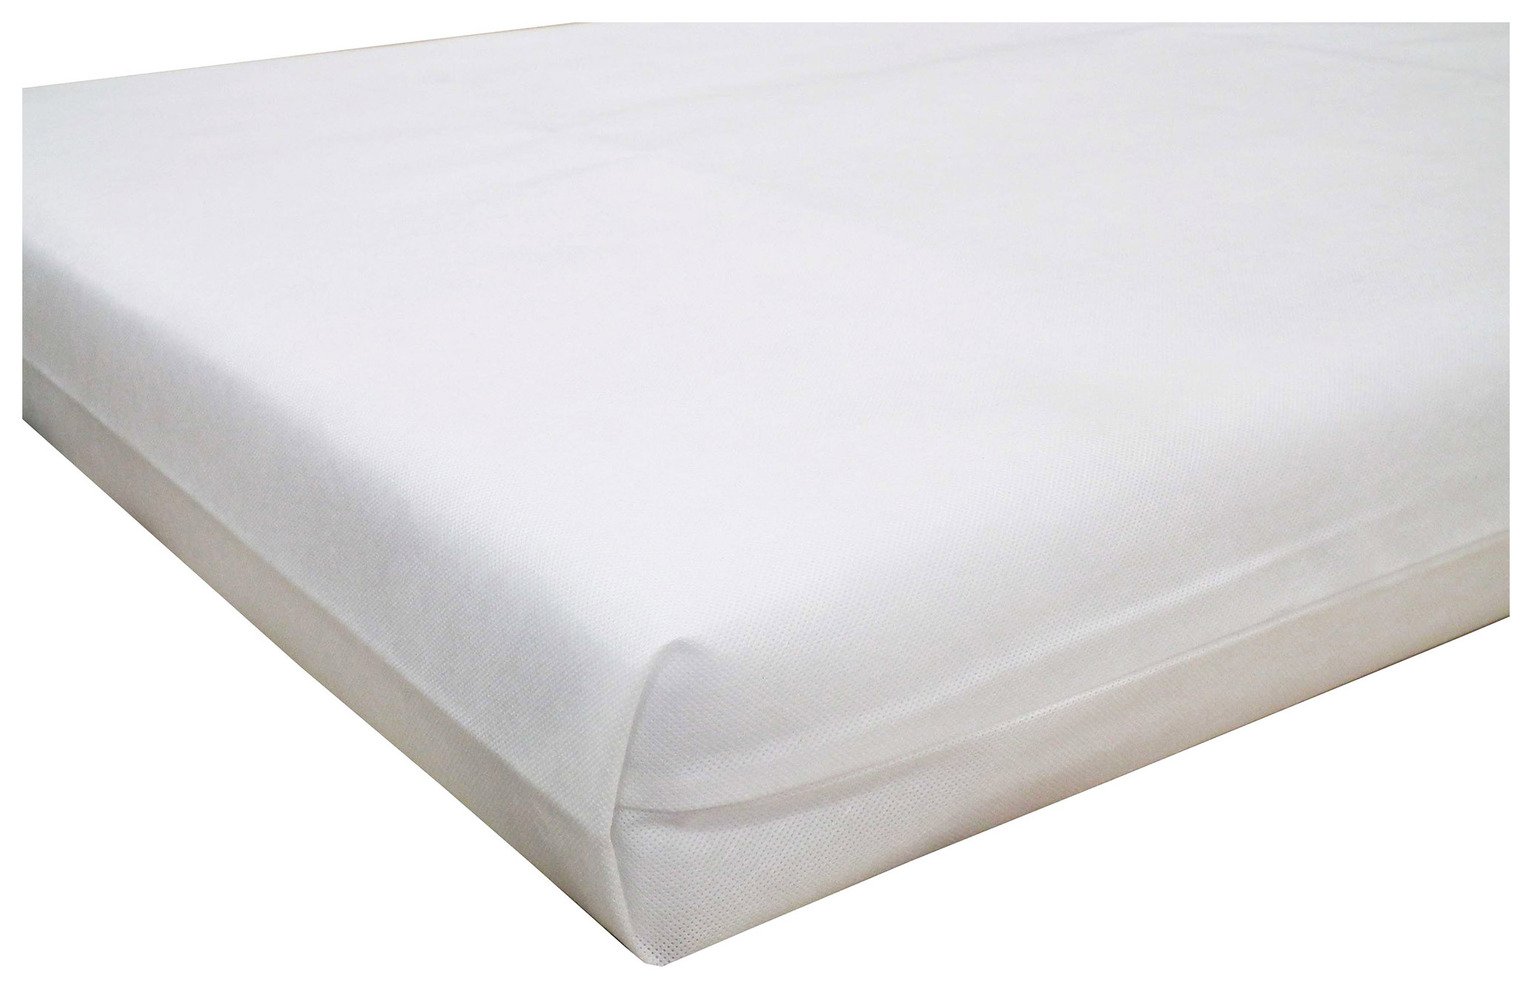 snuggletime large cot mattress size